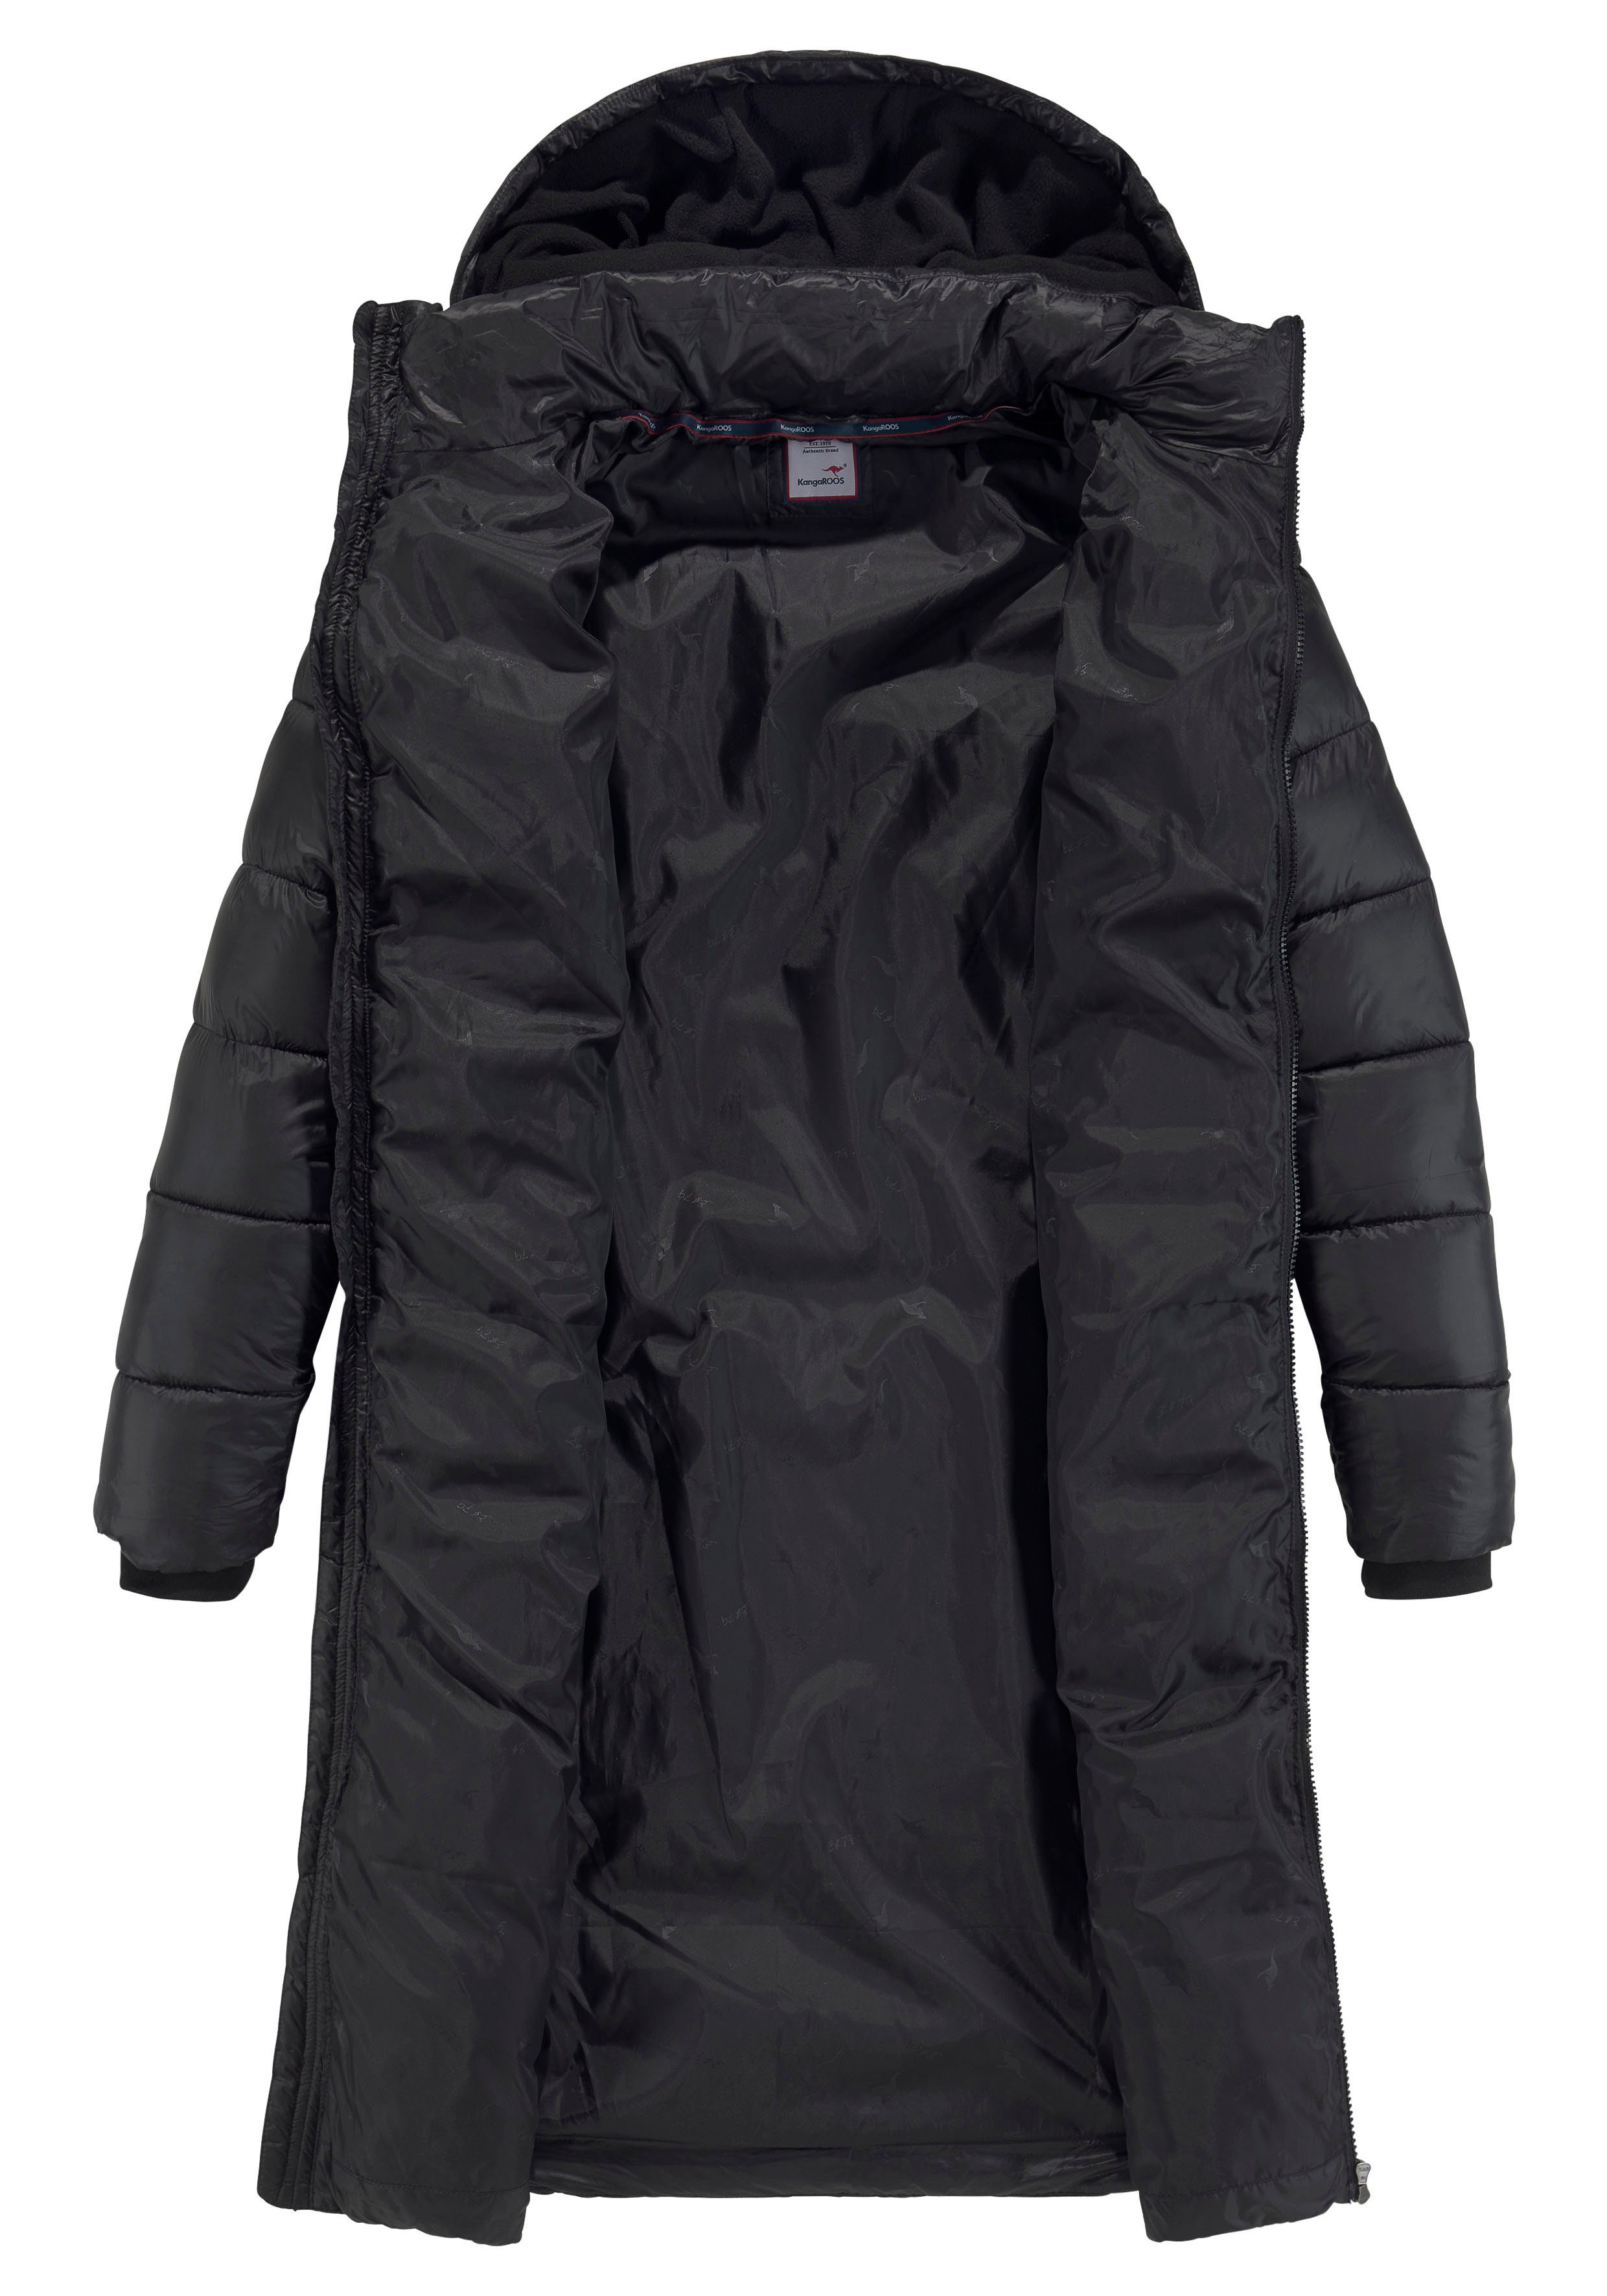 Kapuze KangaROOS (Jacke aus Steppmantel abnehmbarer black mit Material) nachhaltigem